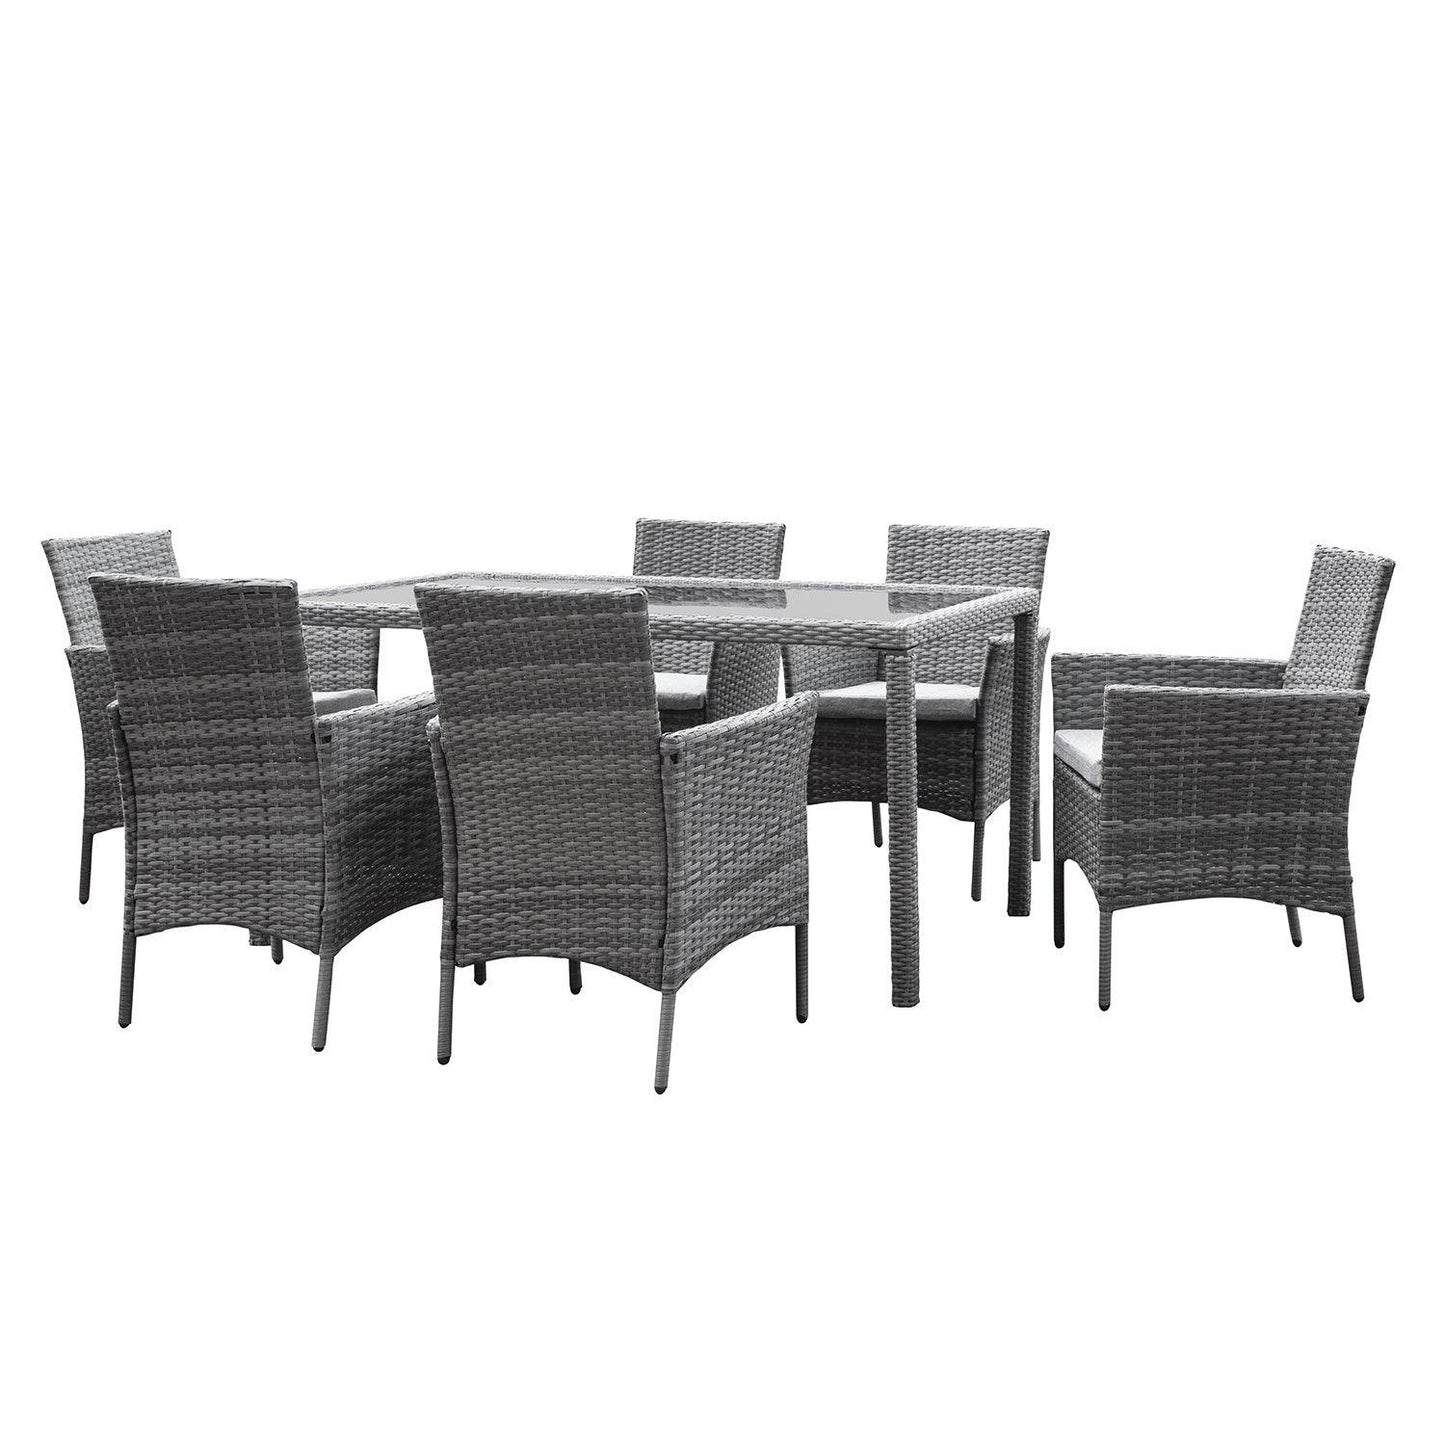 Marston 6 Seater Rattan Outdoor Dining Set - Rattan Garden Furniture - Grey - Glass Top - Laura James